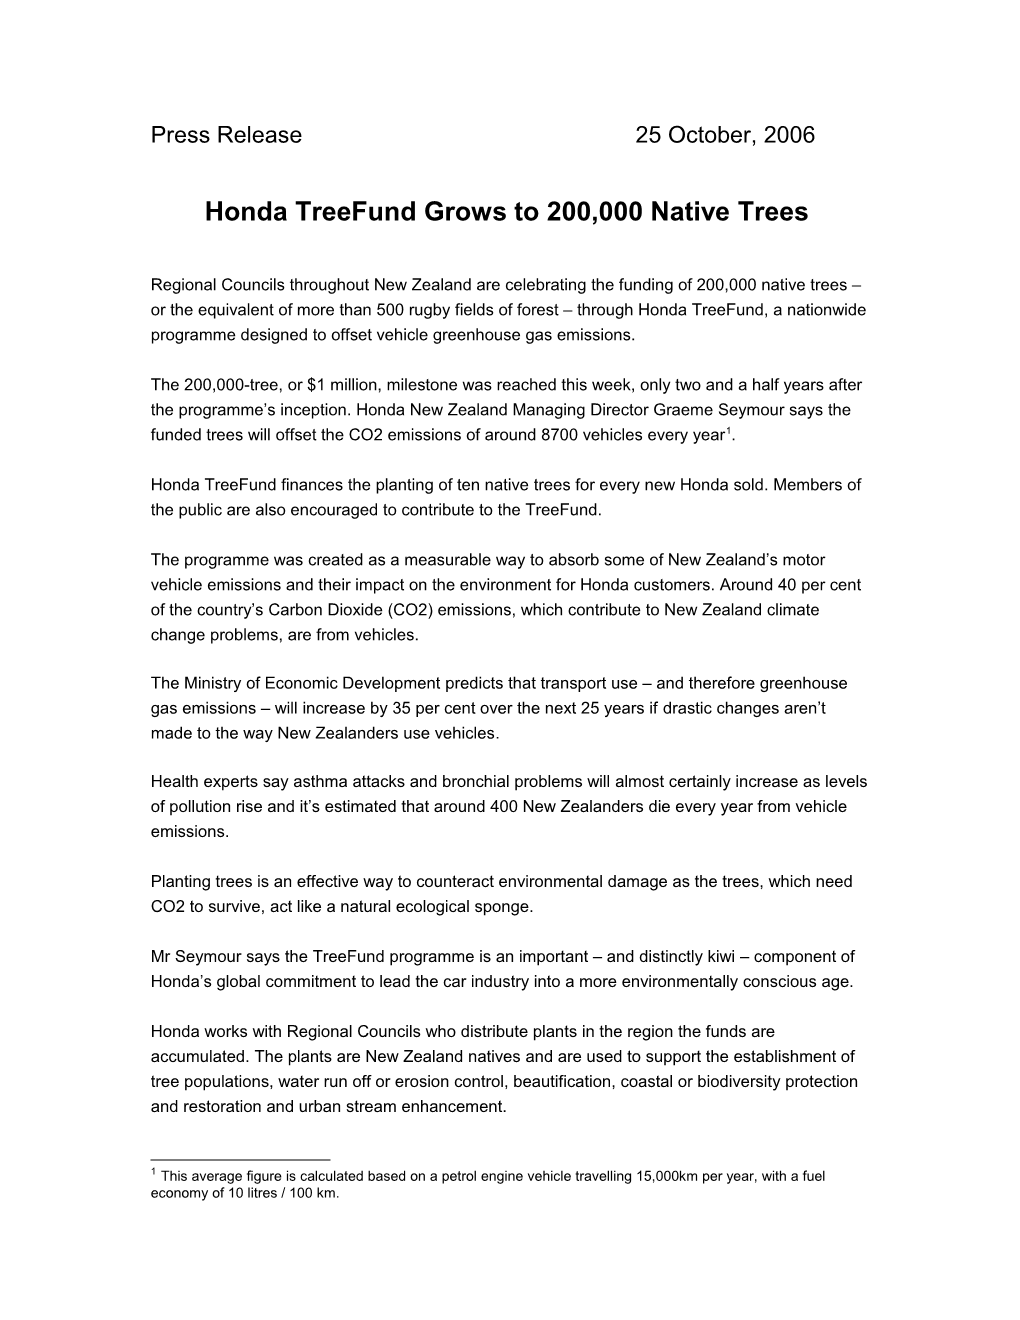 Honda Treefund Grows to 200,000 Native Trees